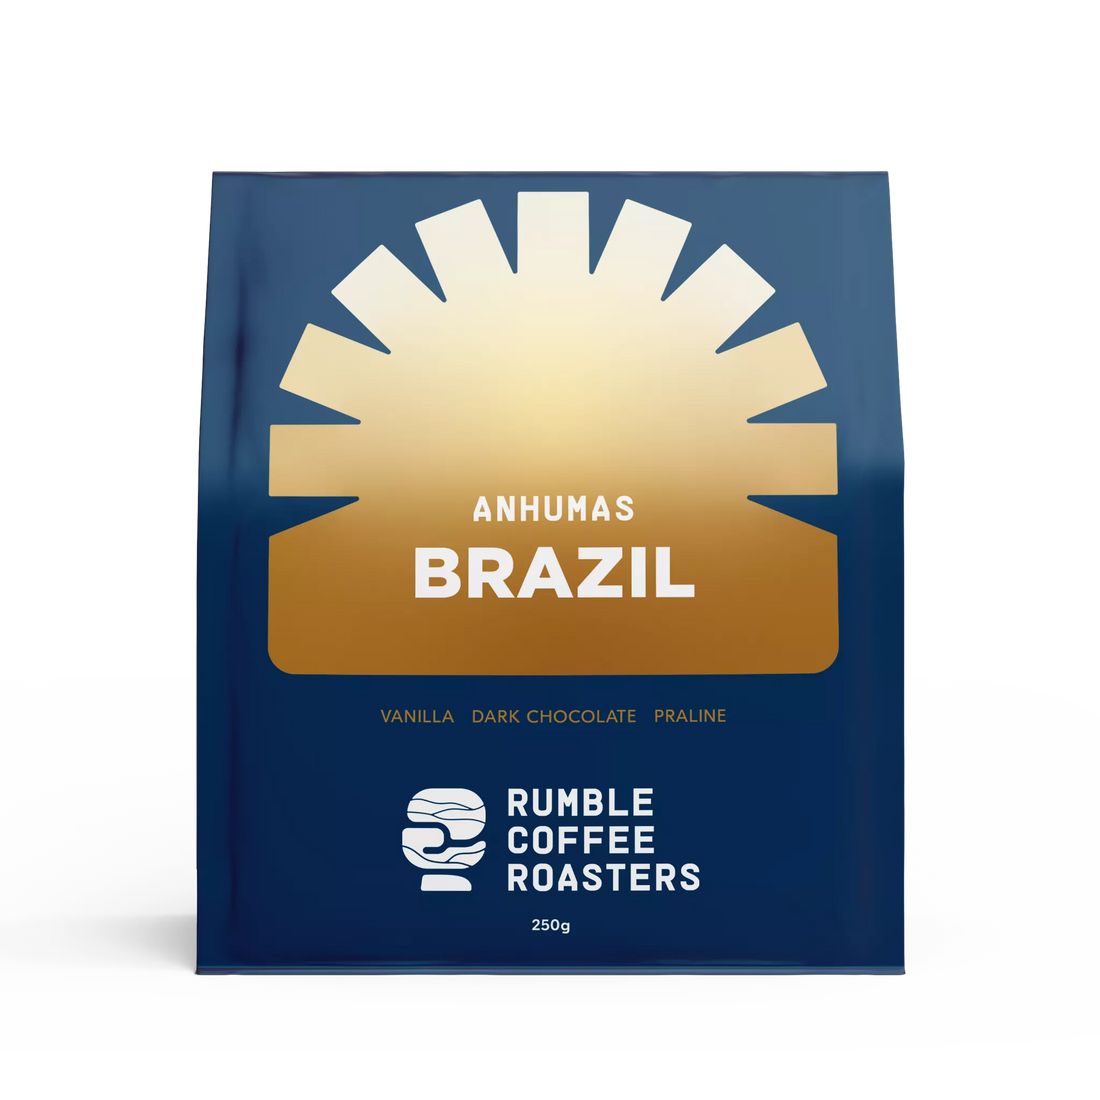 Brazil Anhumas Espresso - Rumble Coffee